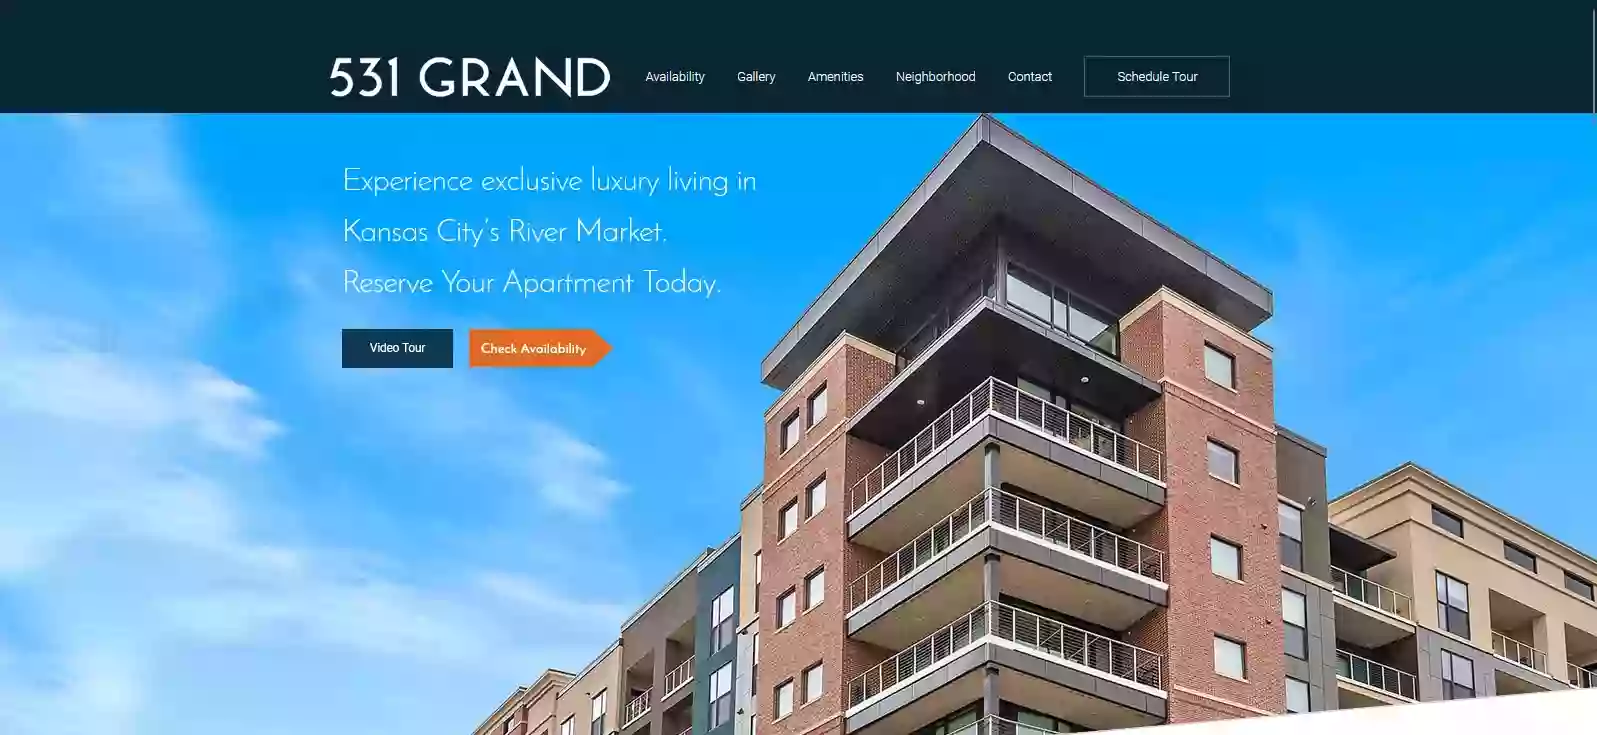 531 Grand Apartments